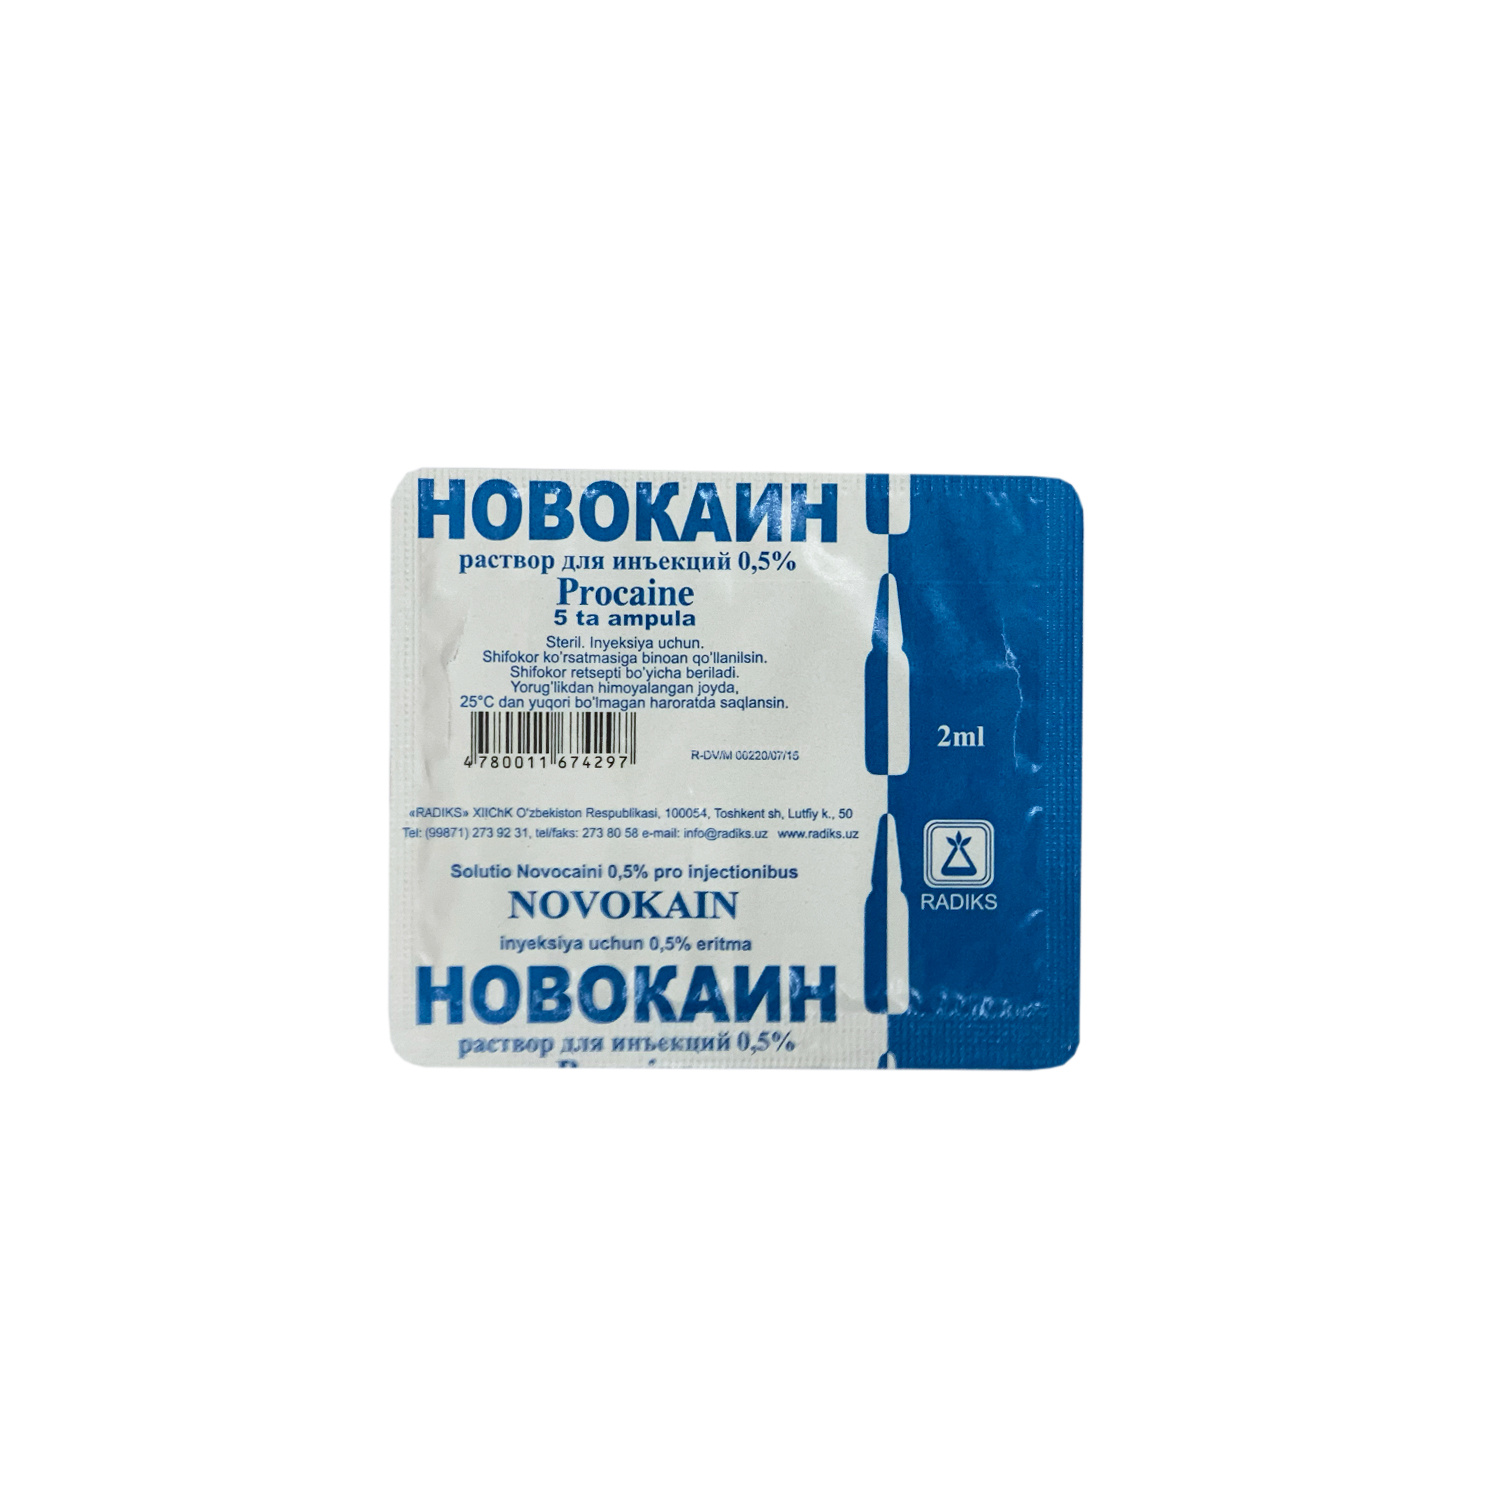 Novokain (prokain) eritmasi 0.5% 2ml №5 Radiks